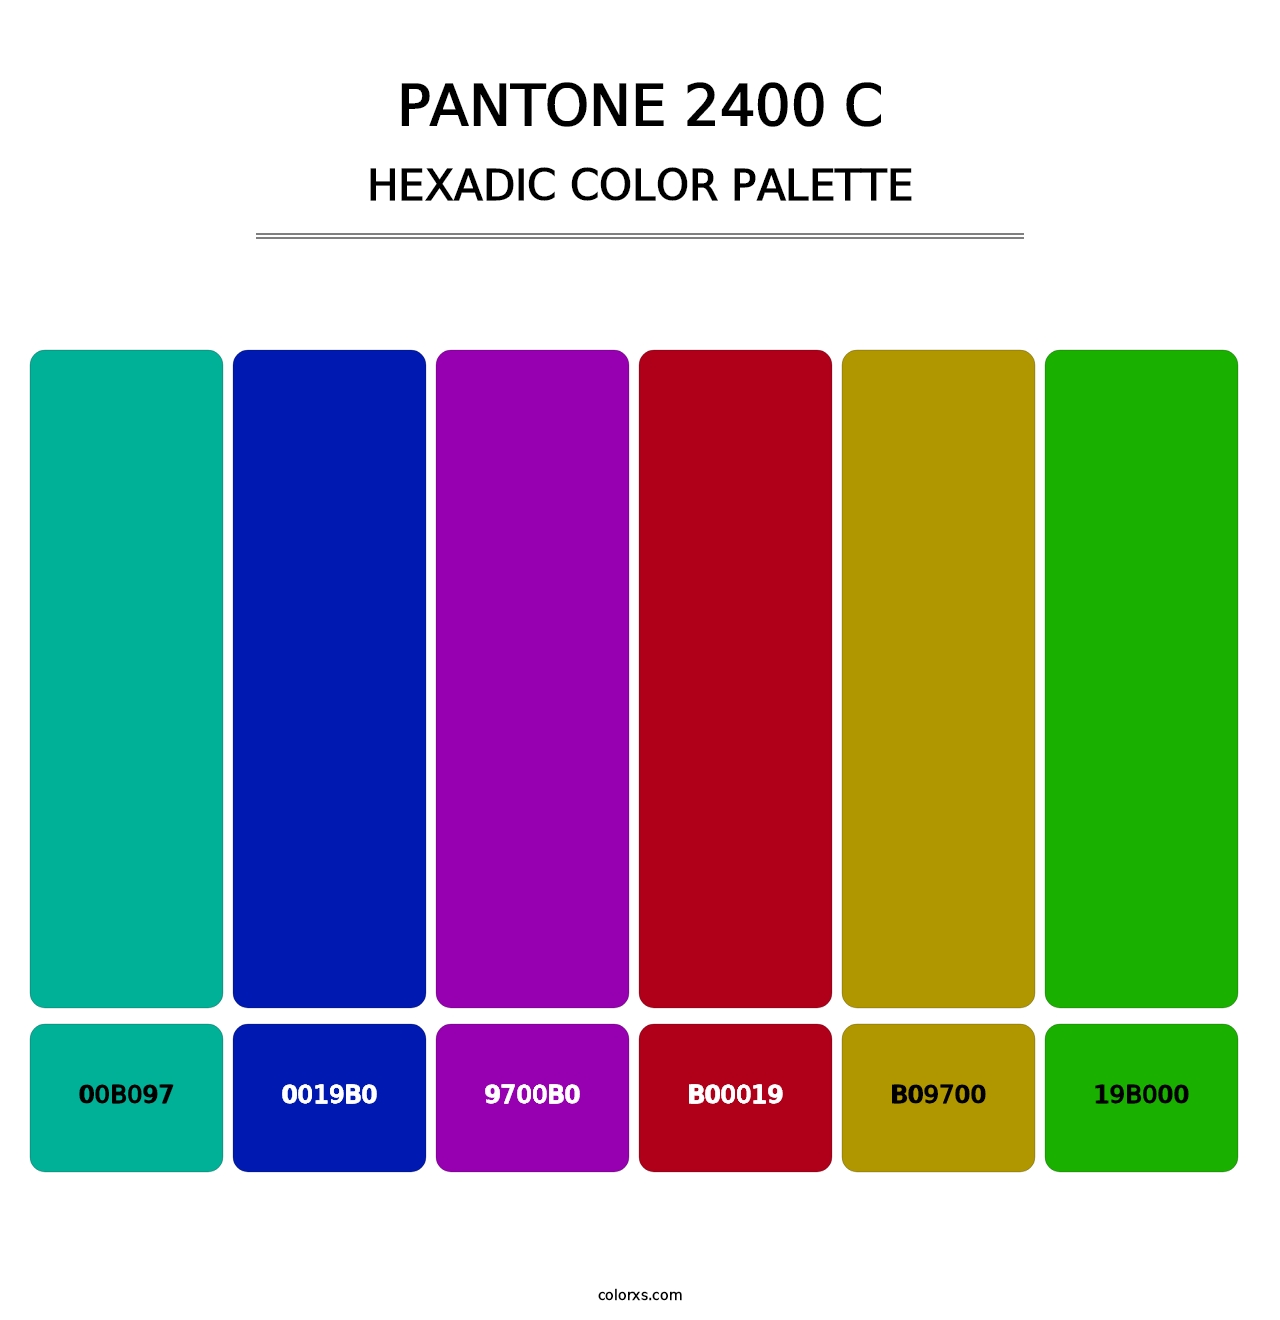 PANTONE 2400 C - Hexadic Color Palette